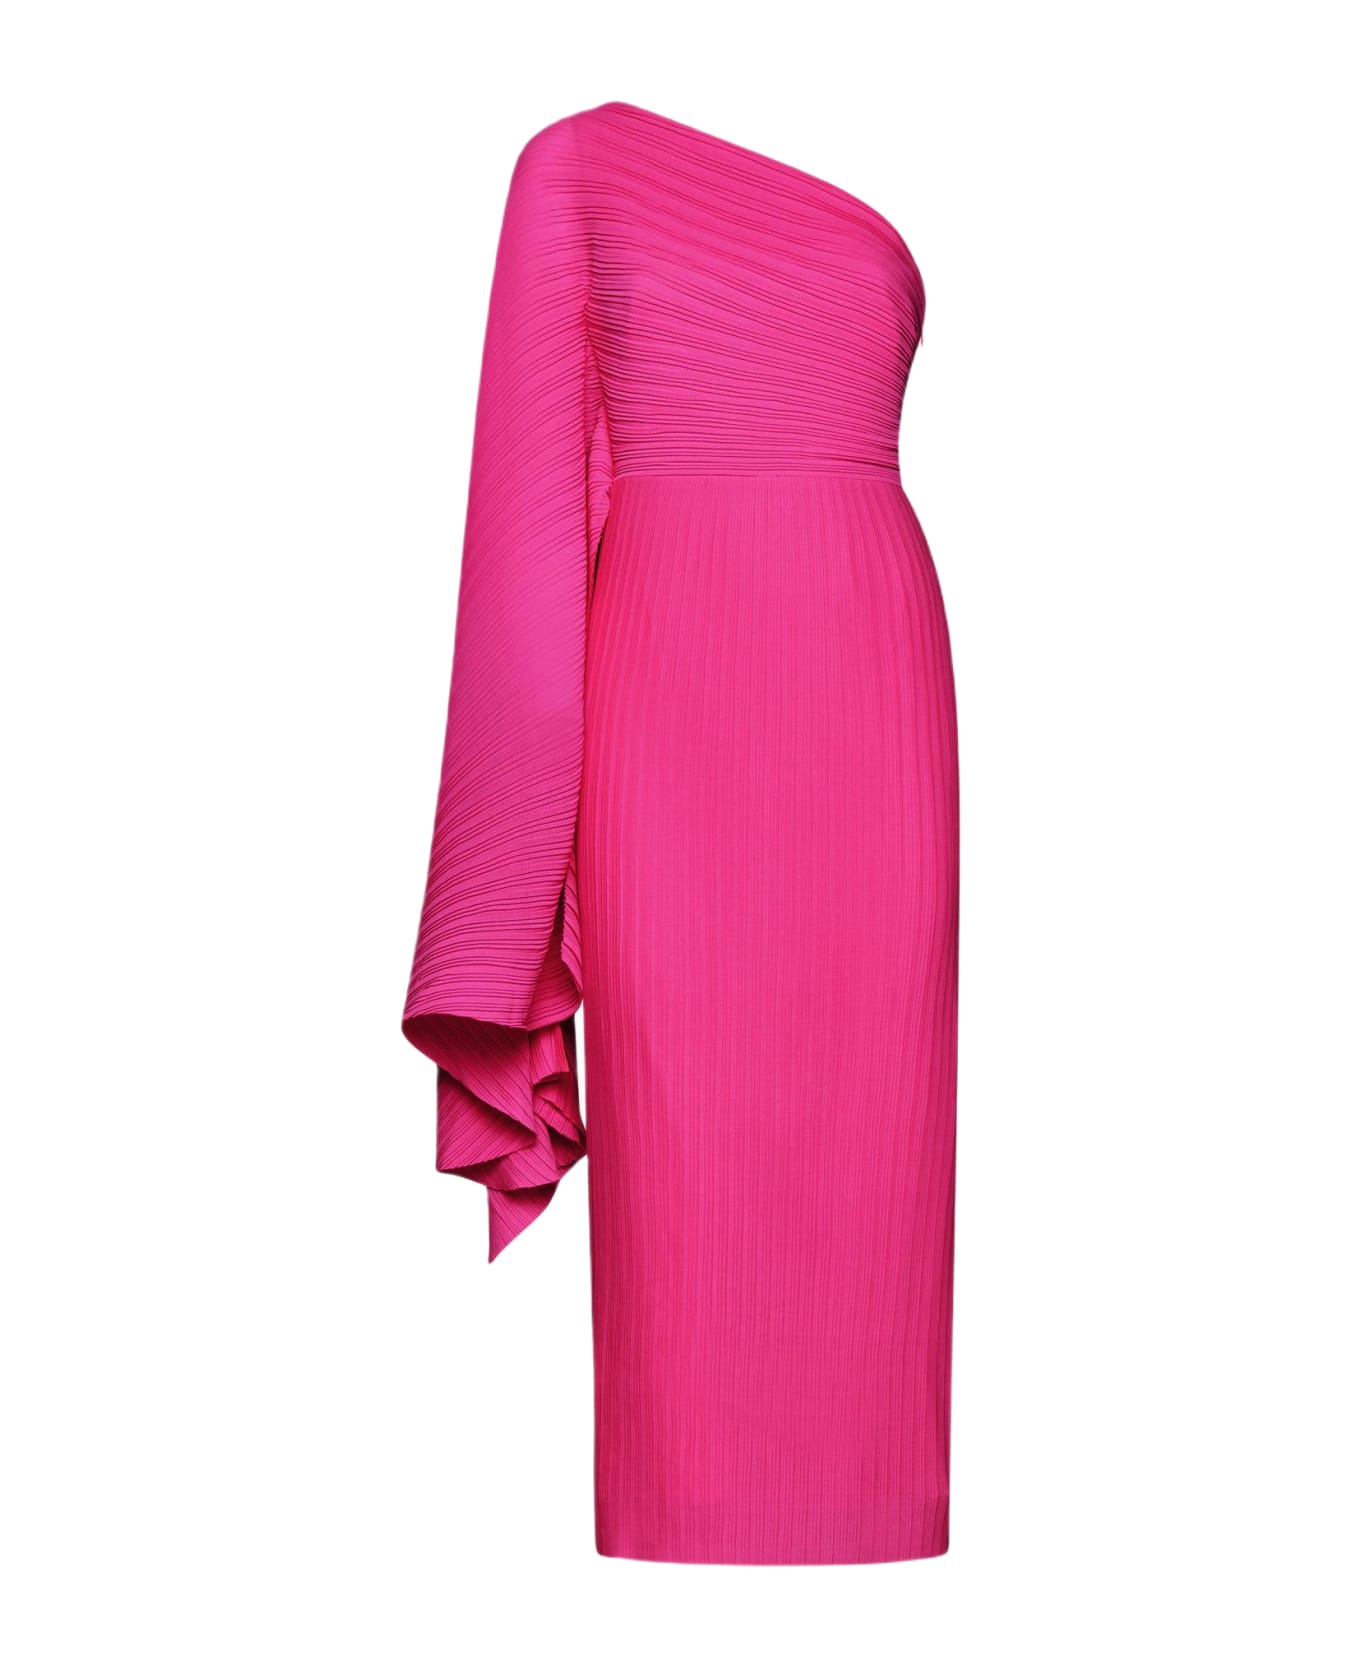 Solace London Lenna Pleated Crepe Midi Dress - Hot pink